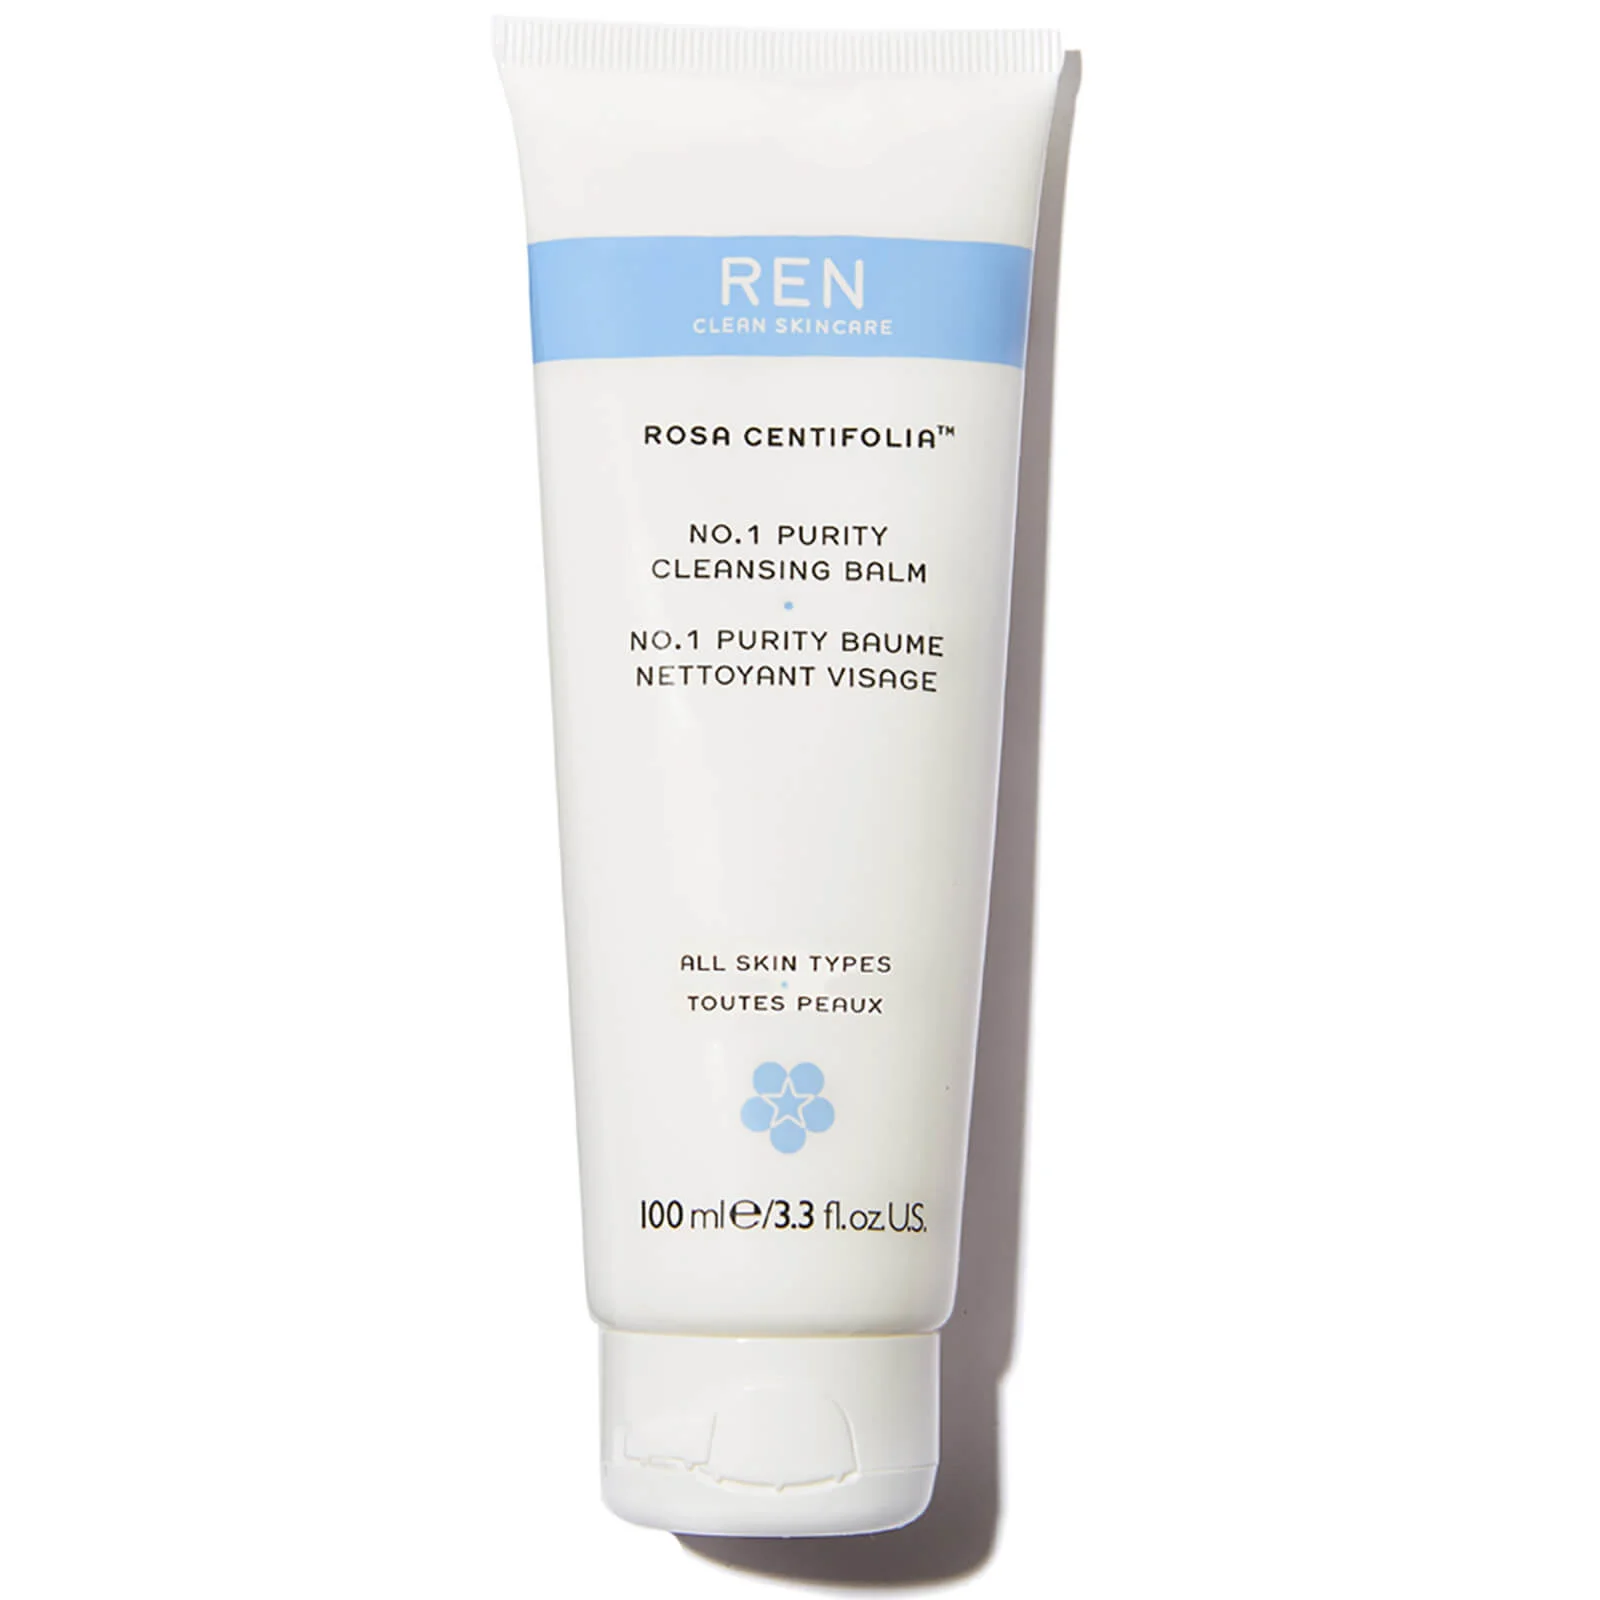 REN Clean Skincare Rosa Centifolia No.1 Purity Cleansing Balm 100ml Image 1